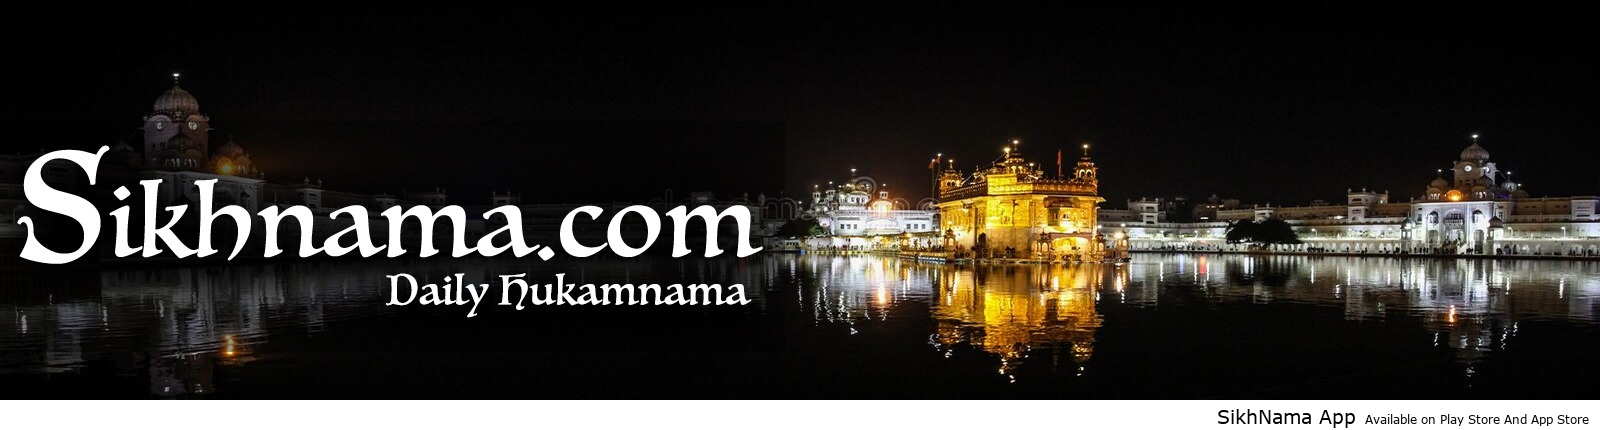 Sikhnama.com